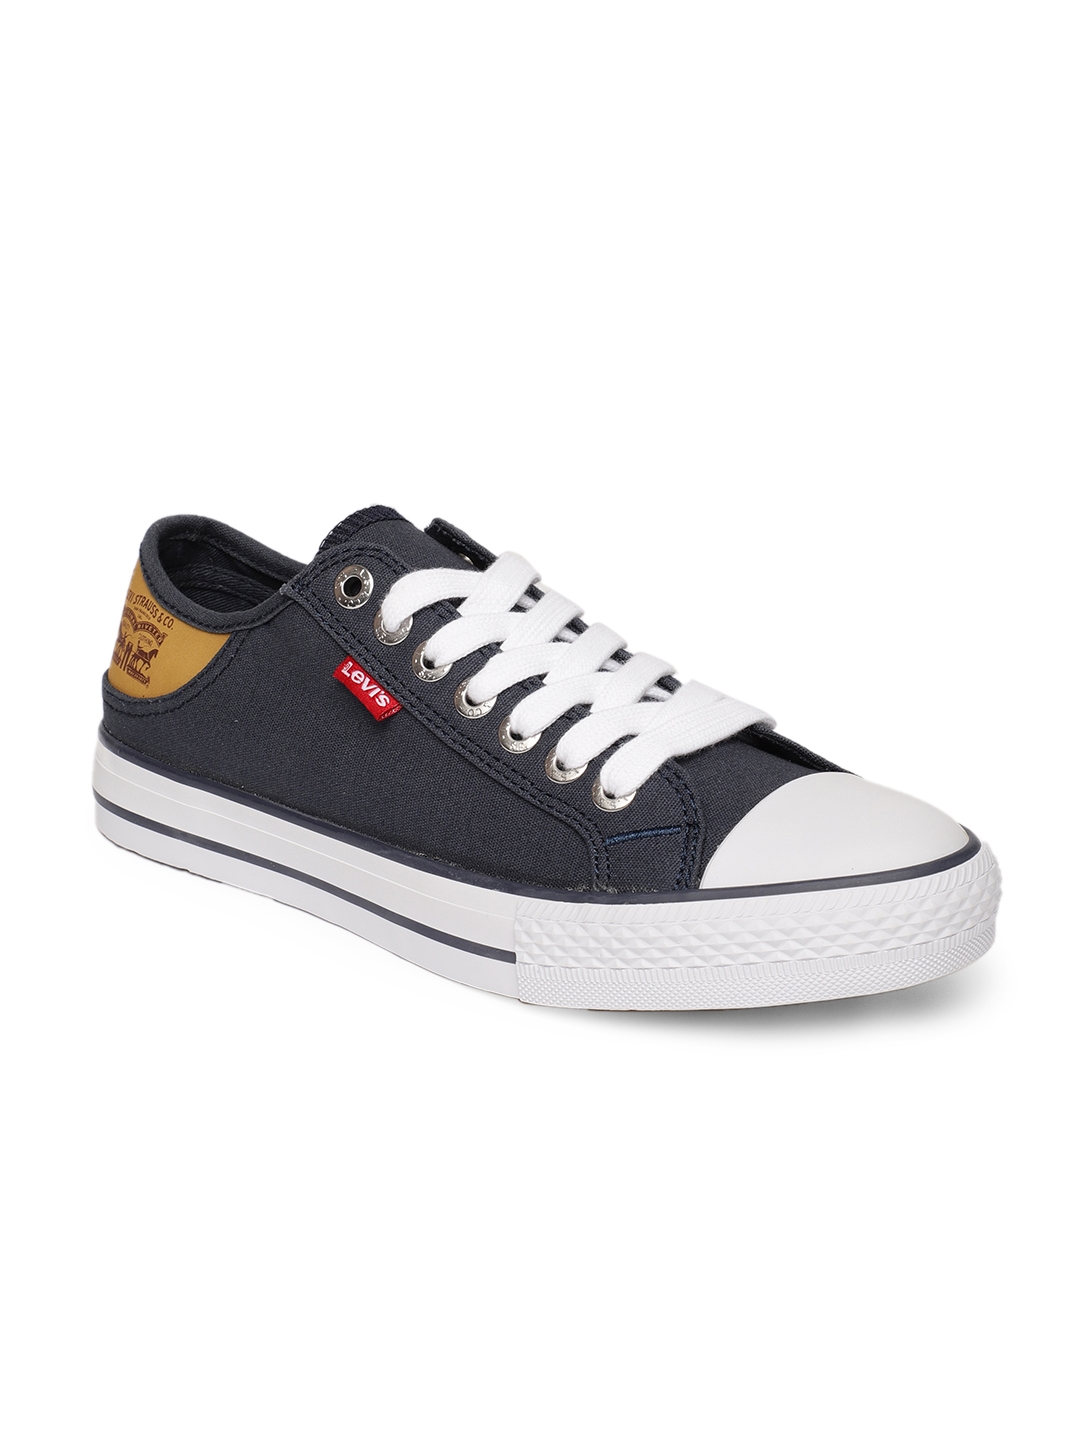 Buy Levis Men Navy Blue STAN BUCK Sneakers - Casual Shoes for Men 8859869 |  Myntra